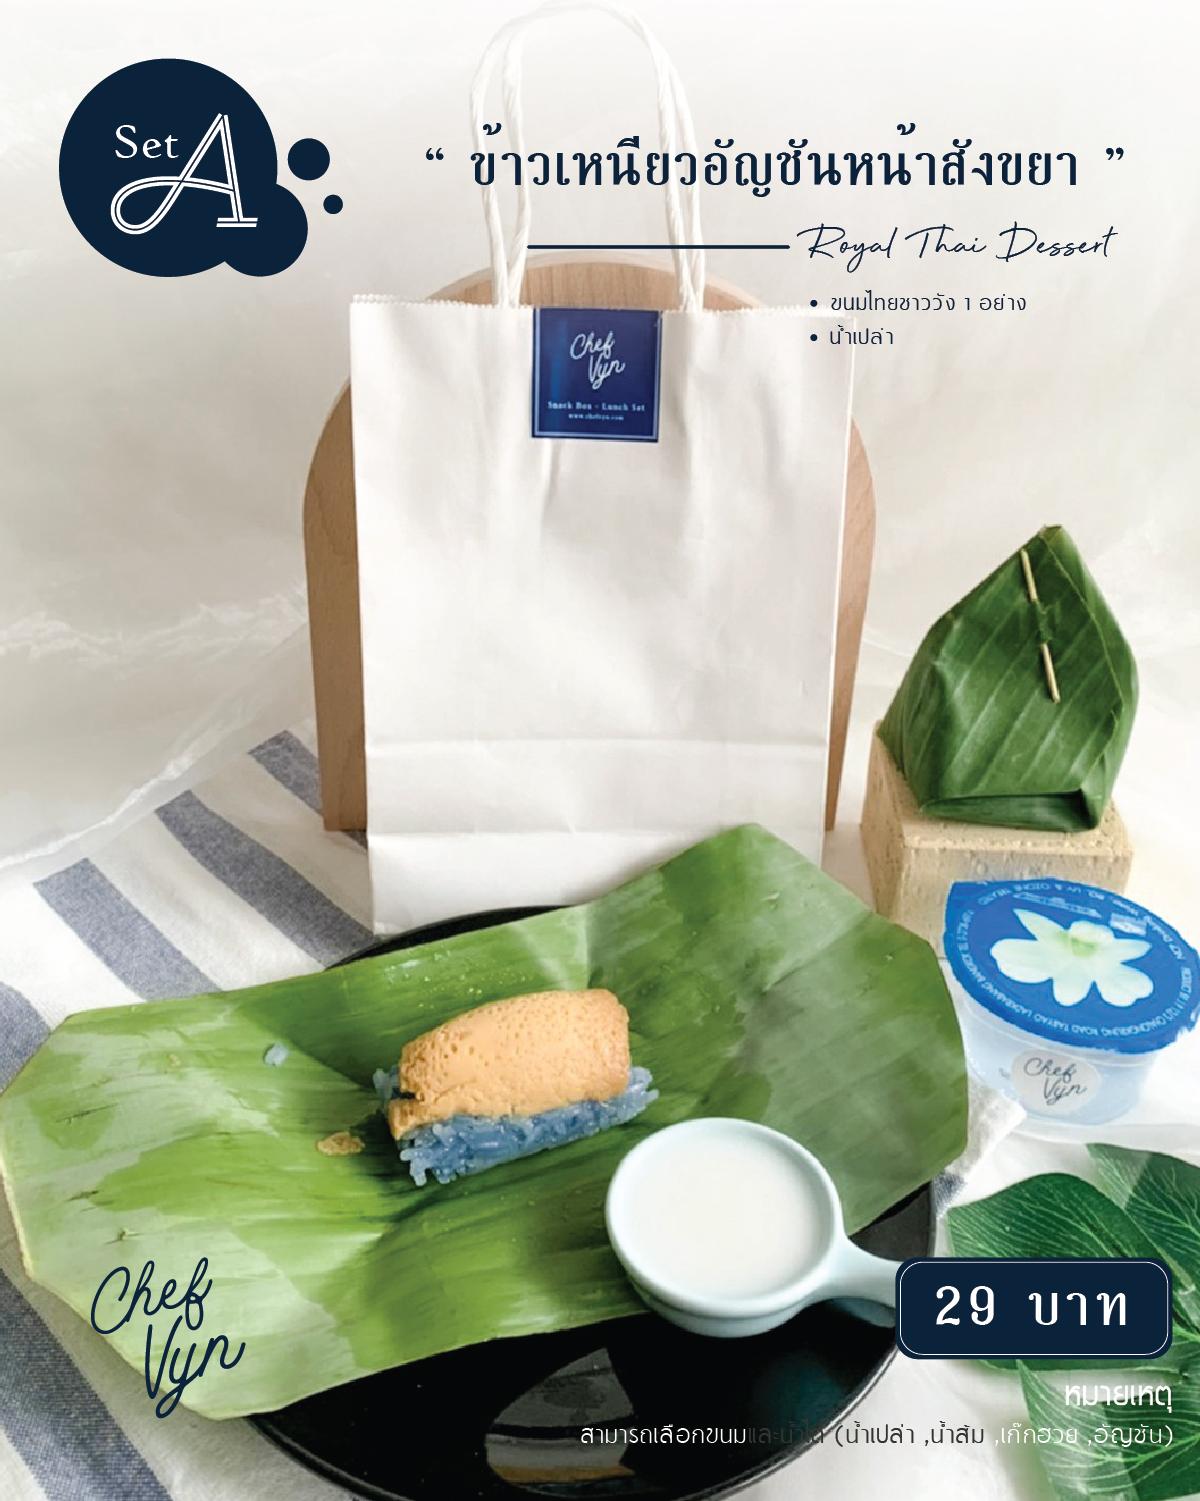 Royal Thai Dessert ข้าวเหนียวอันชัญสังขยา พร้อมน้ำ (เลือกได้) Set A